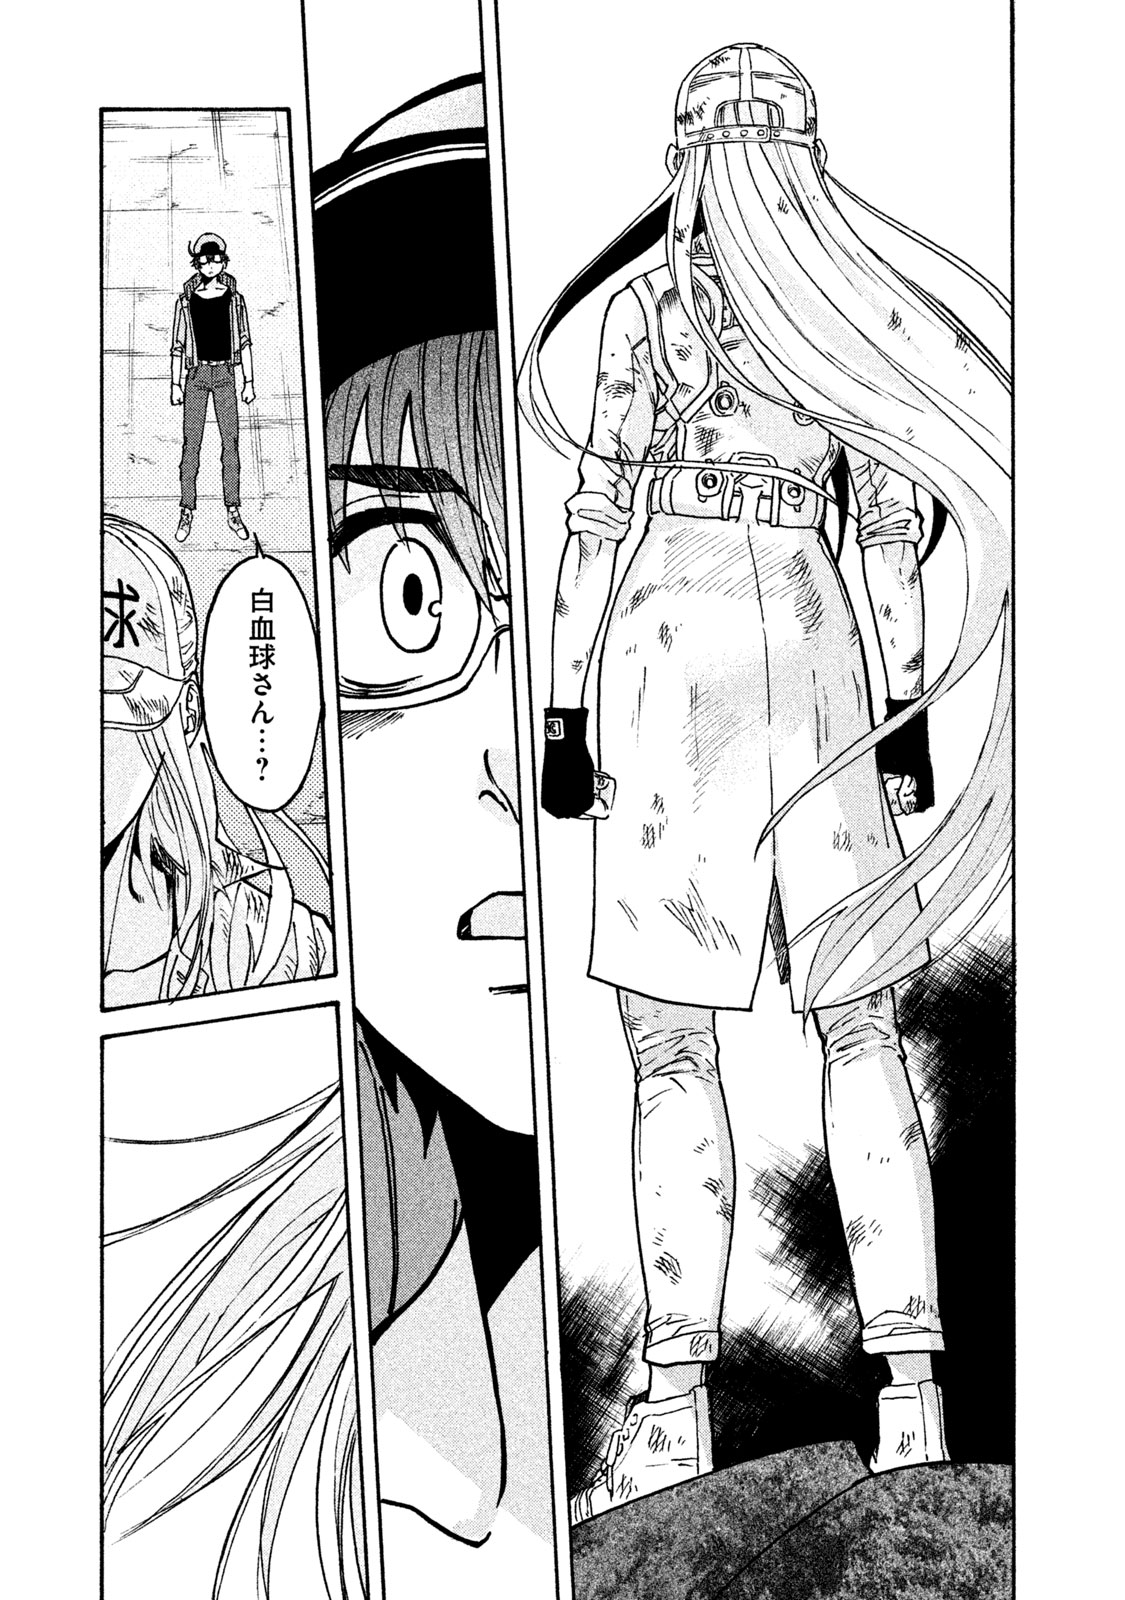 Hataraku Saibou BLACK - Chapter 17 - Page 19